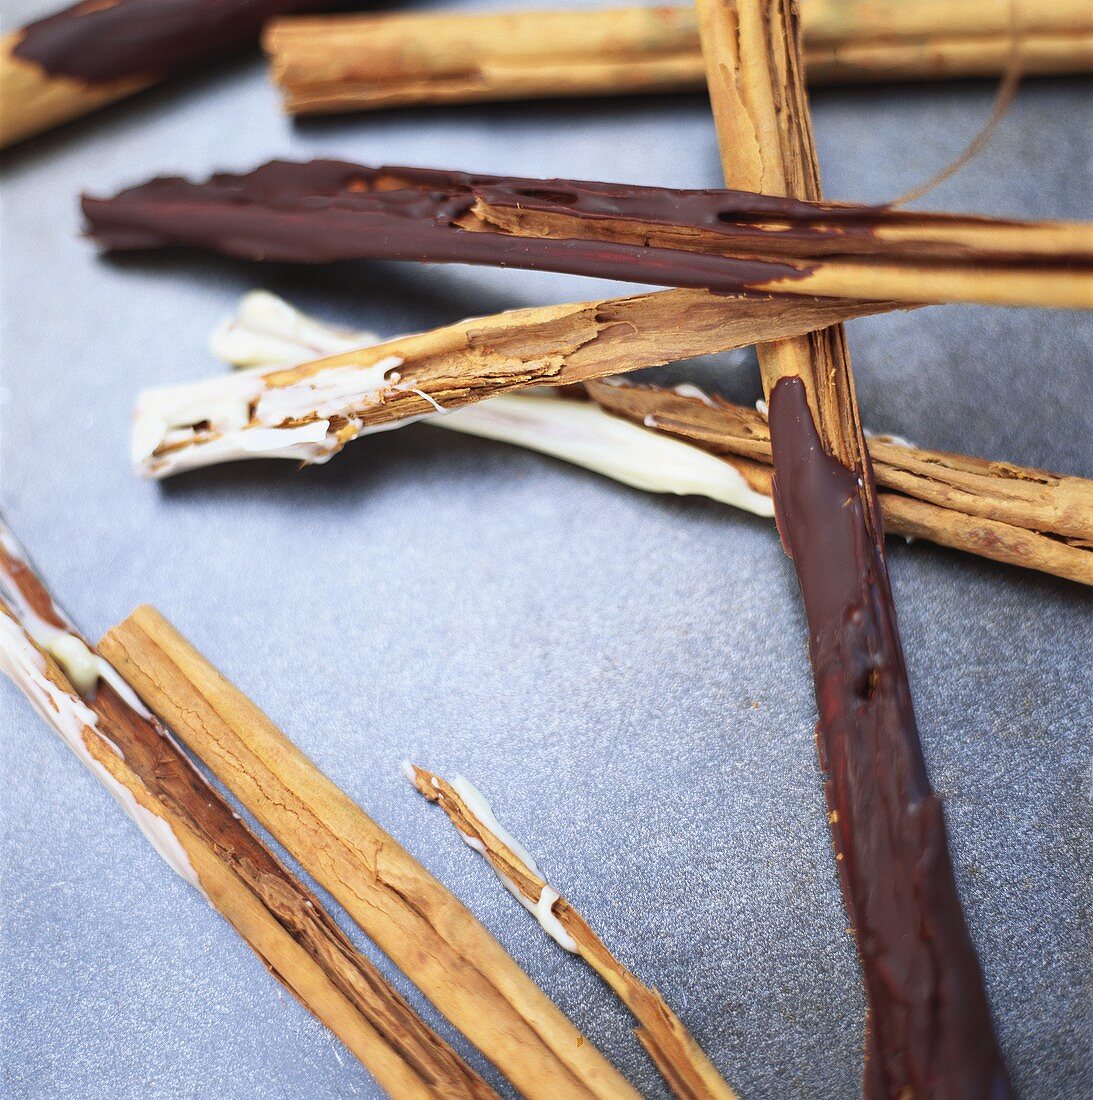 Chocolate-coated cinnamon sticks